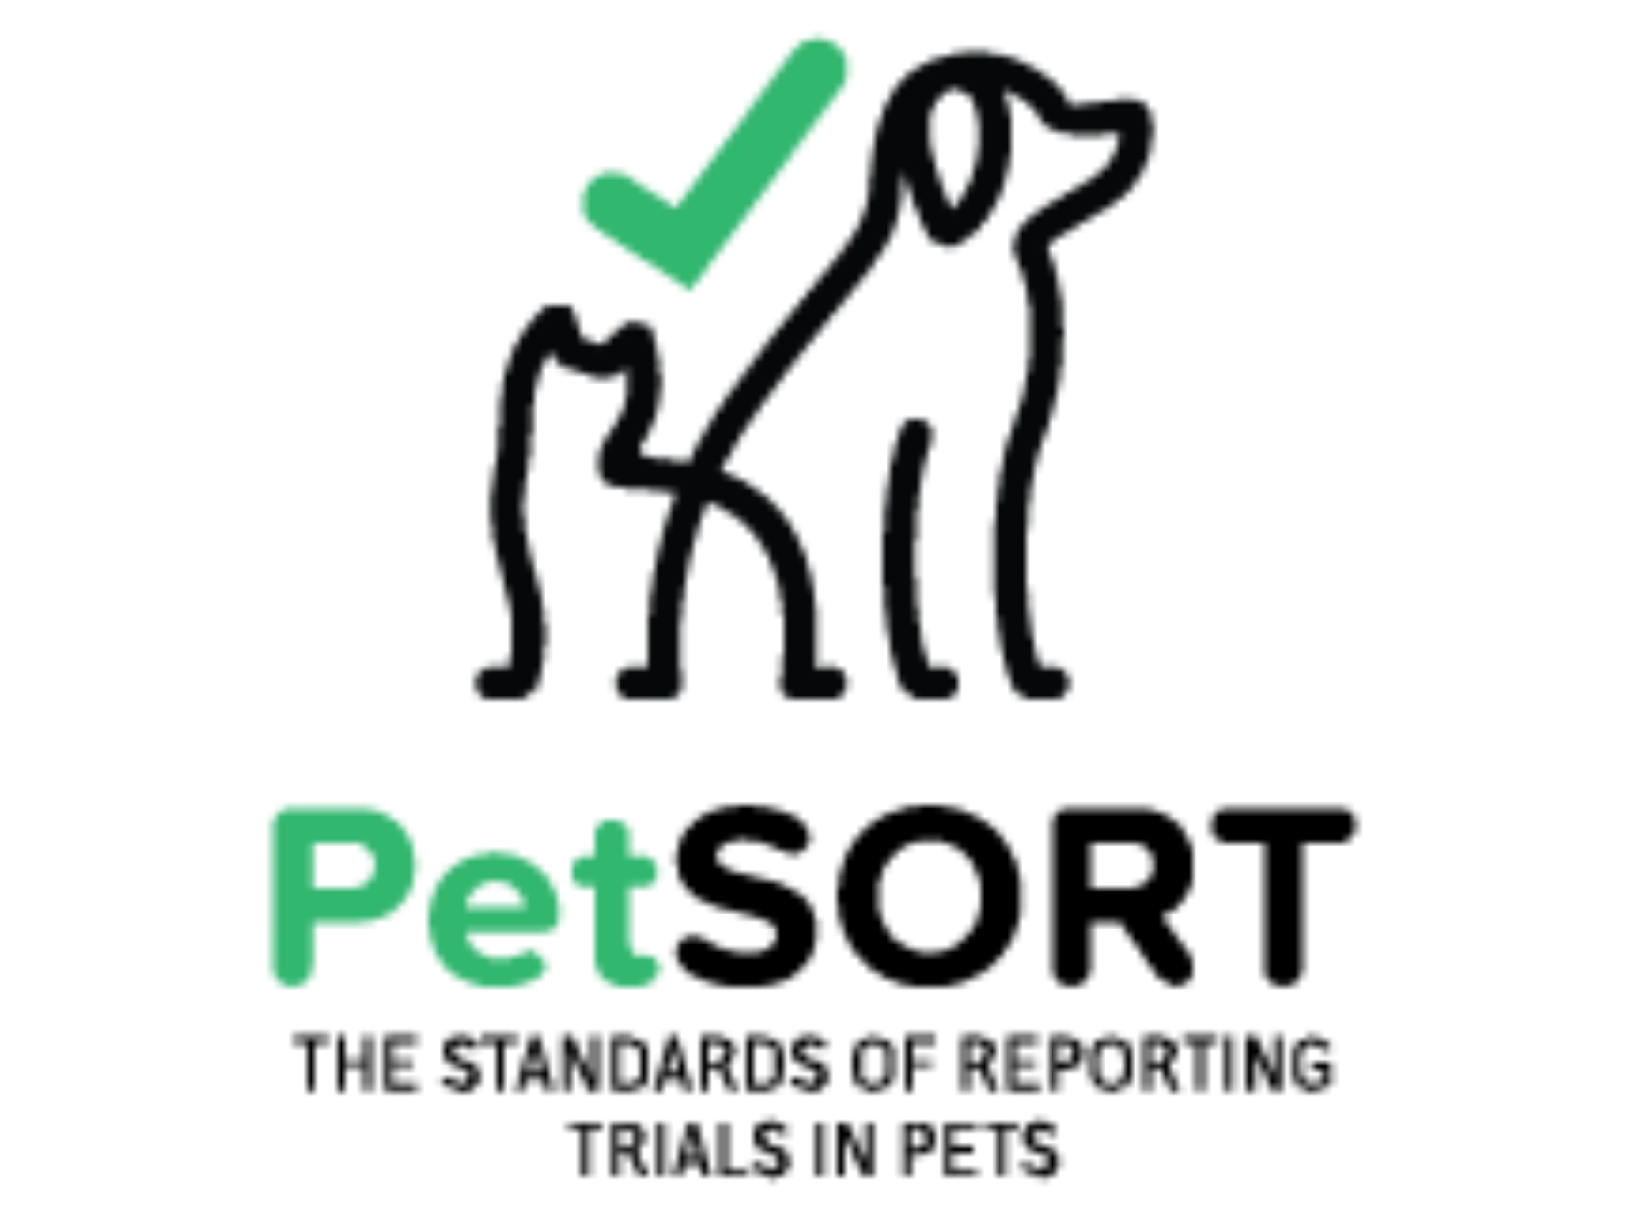 Resized PetSort Image